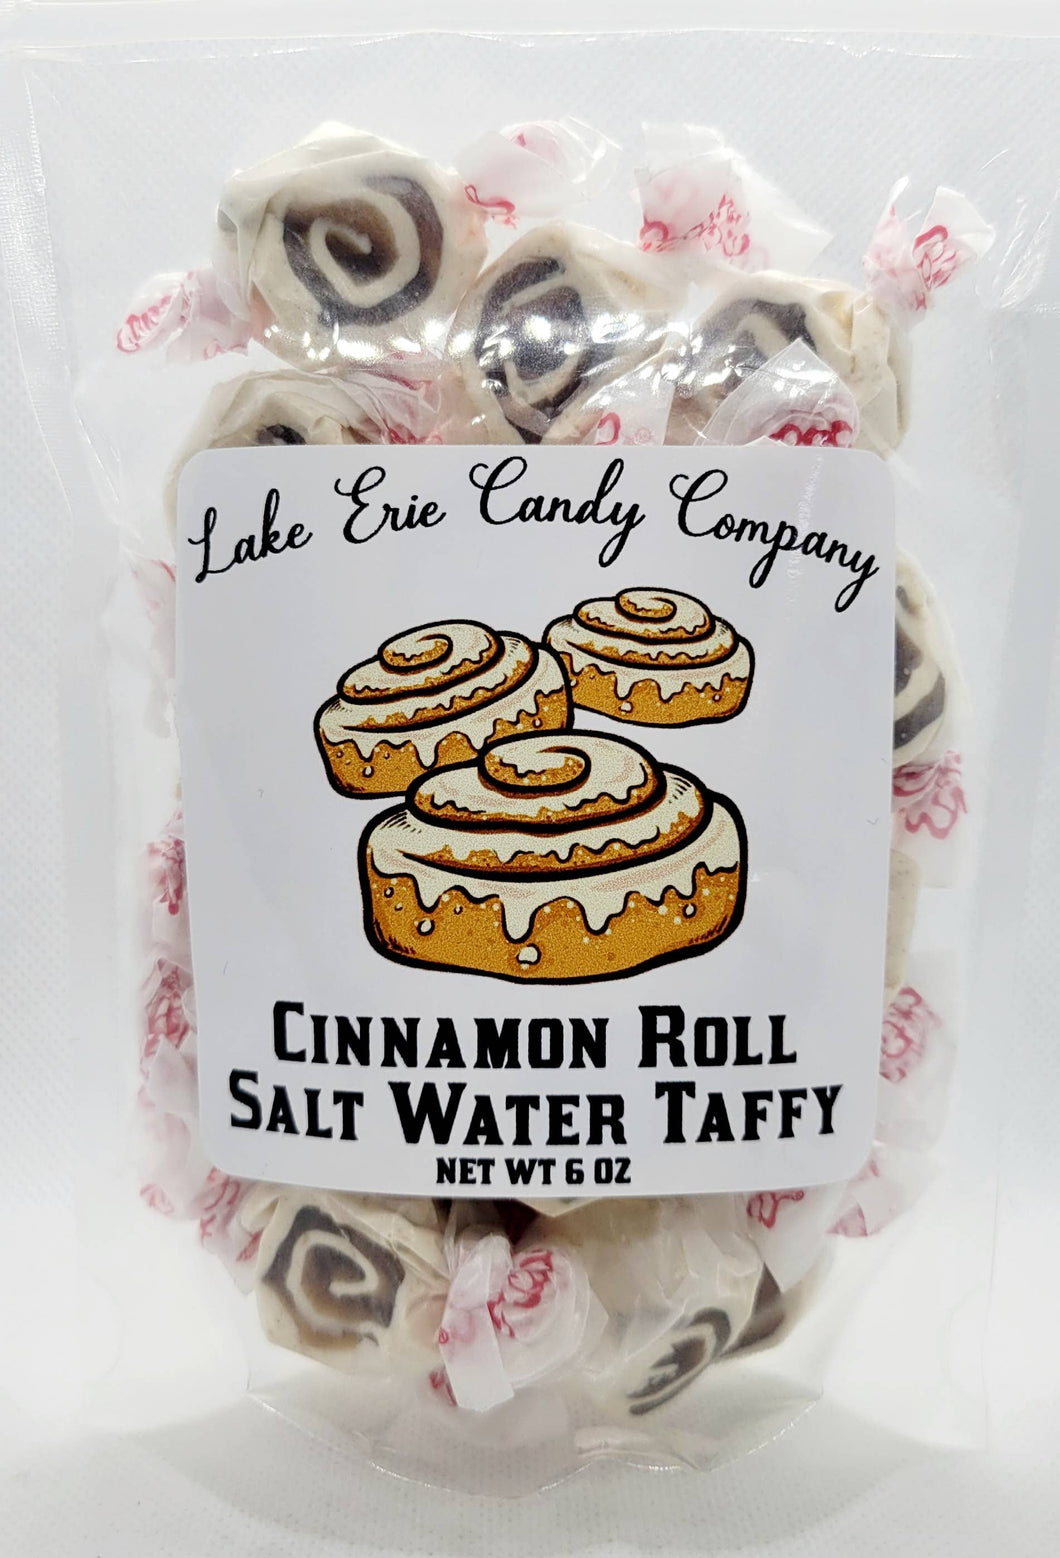 Lake Erie Candy Company - Cinnamon Roll Salt Water Taffy